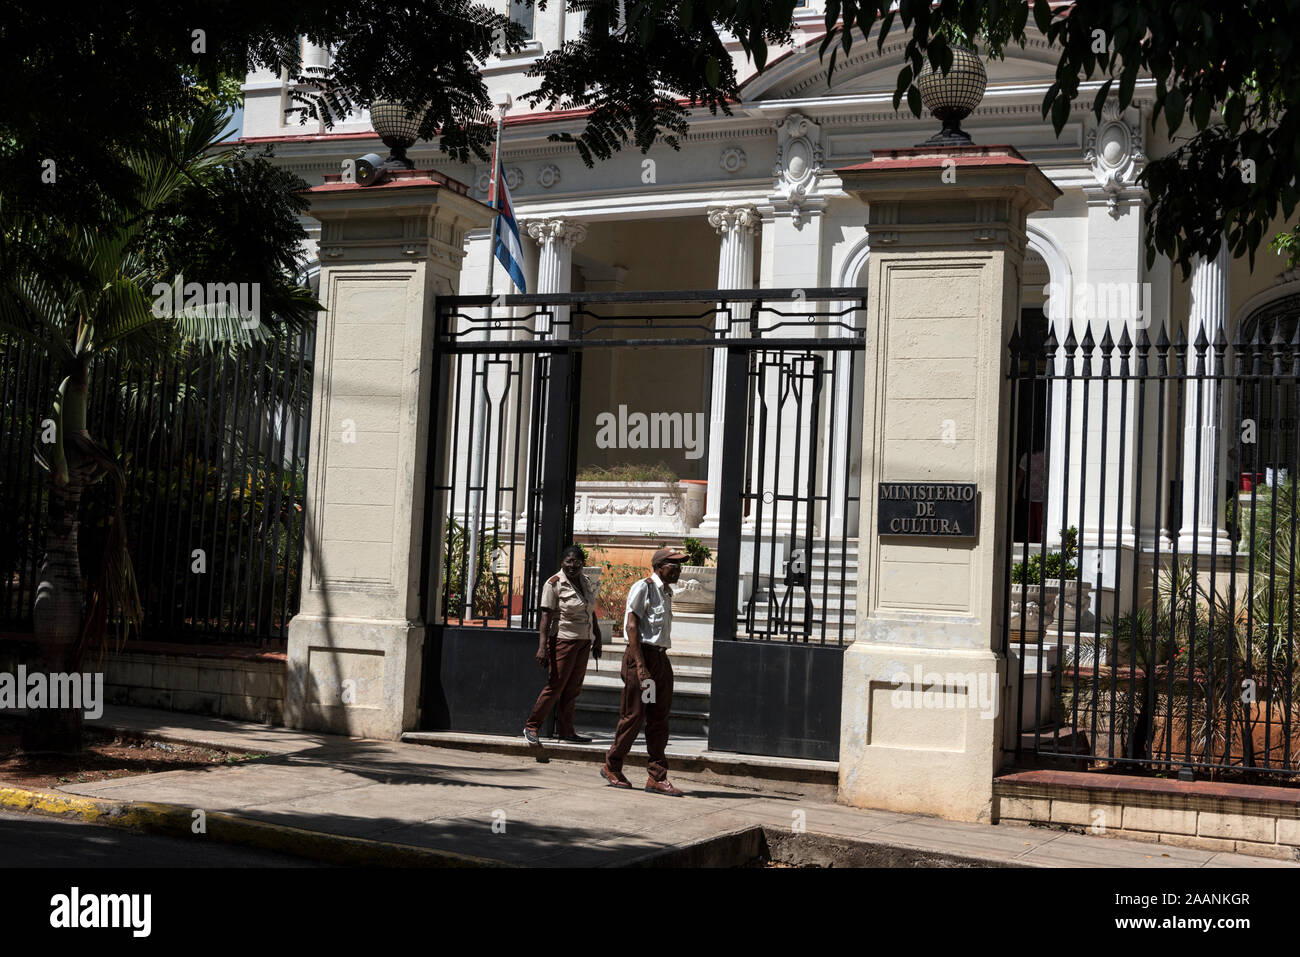 Cuban Ministry of Culture- Ministerio de cultura:  Ave: Carlos Manuel de Cspedes 258 Calle 2 in Havana, Cuba Stock Photo